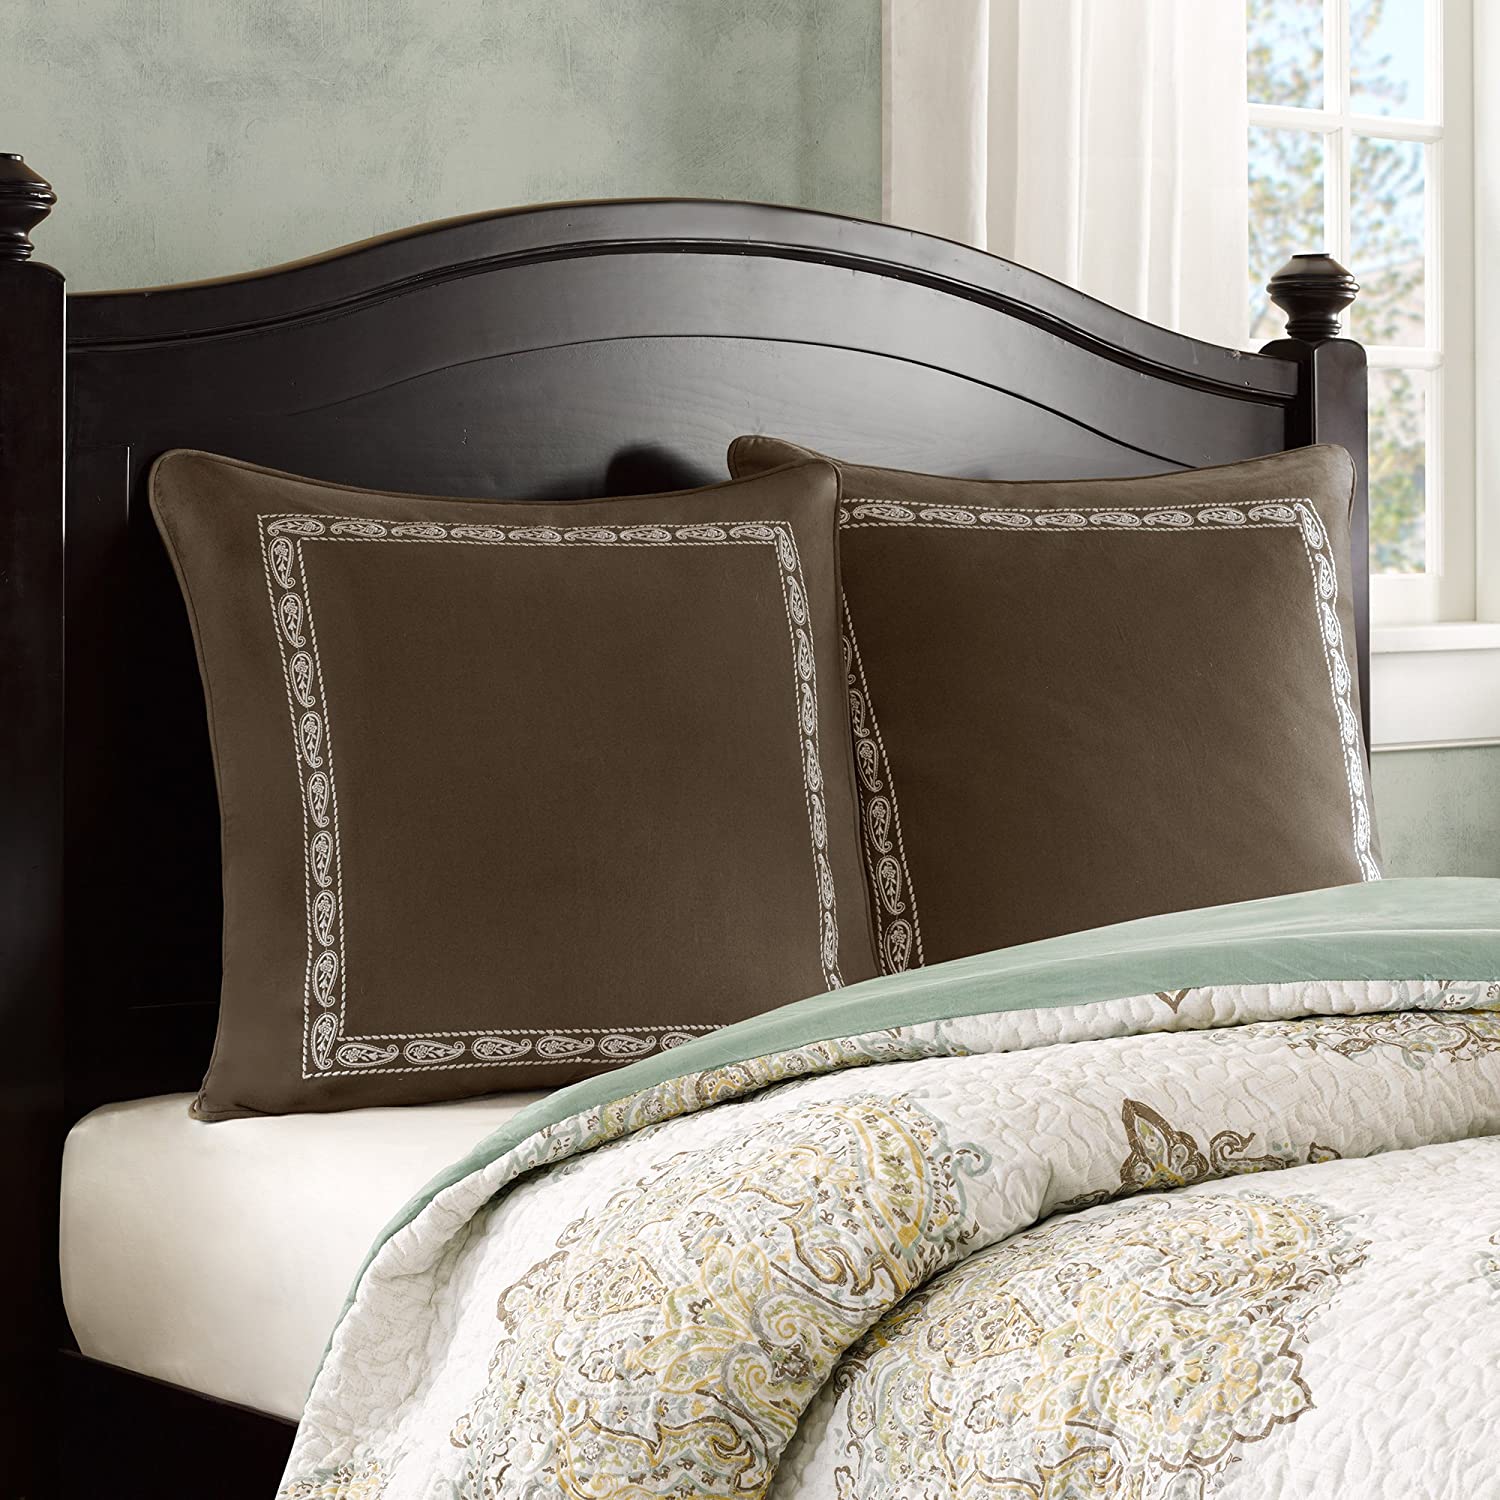 Harbor House Miramar Full Size Bed Comforter Set - Ivory Beige , Damask ‚Äì 4 Pieces Bedding Sets ‚Äì Cotton Bedroom Comforters